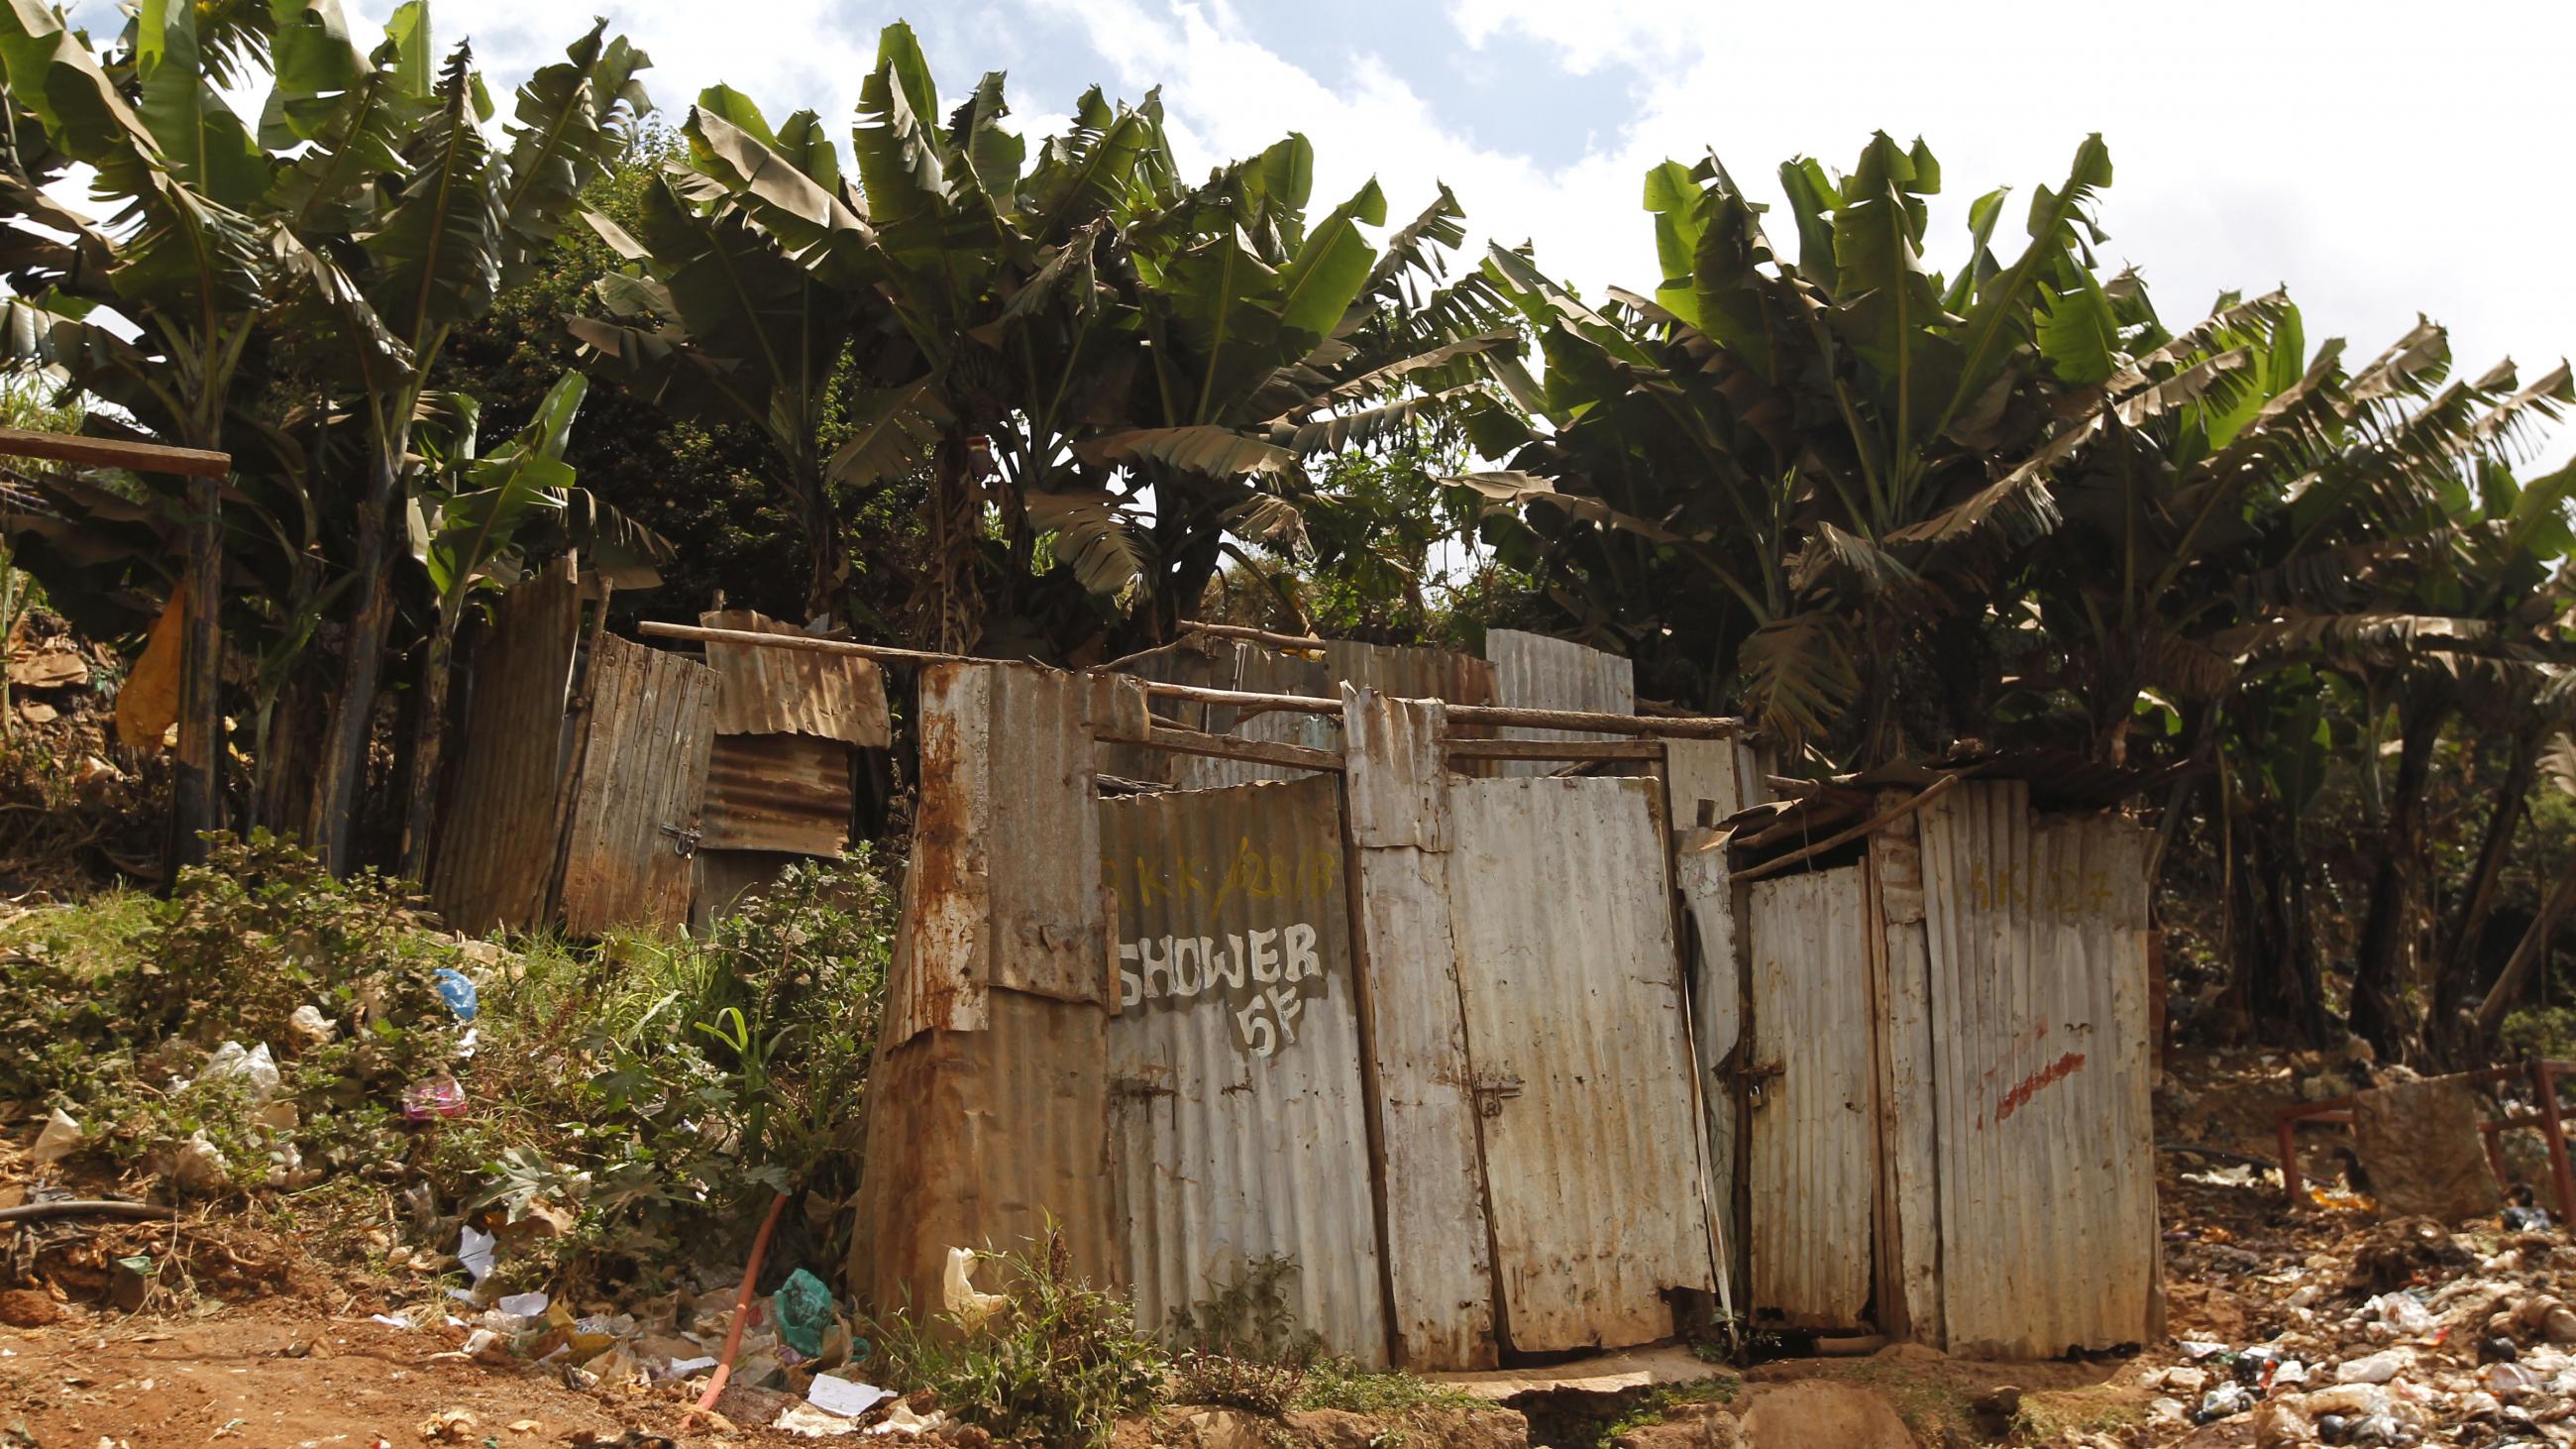 A public toilet constructed of rusty sheets of metal stands in Gatwekera Village in the Kibera slum, in Nairobi, Kenya, on October 12, 2015. 